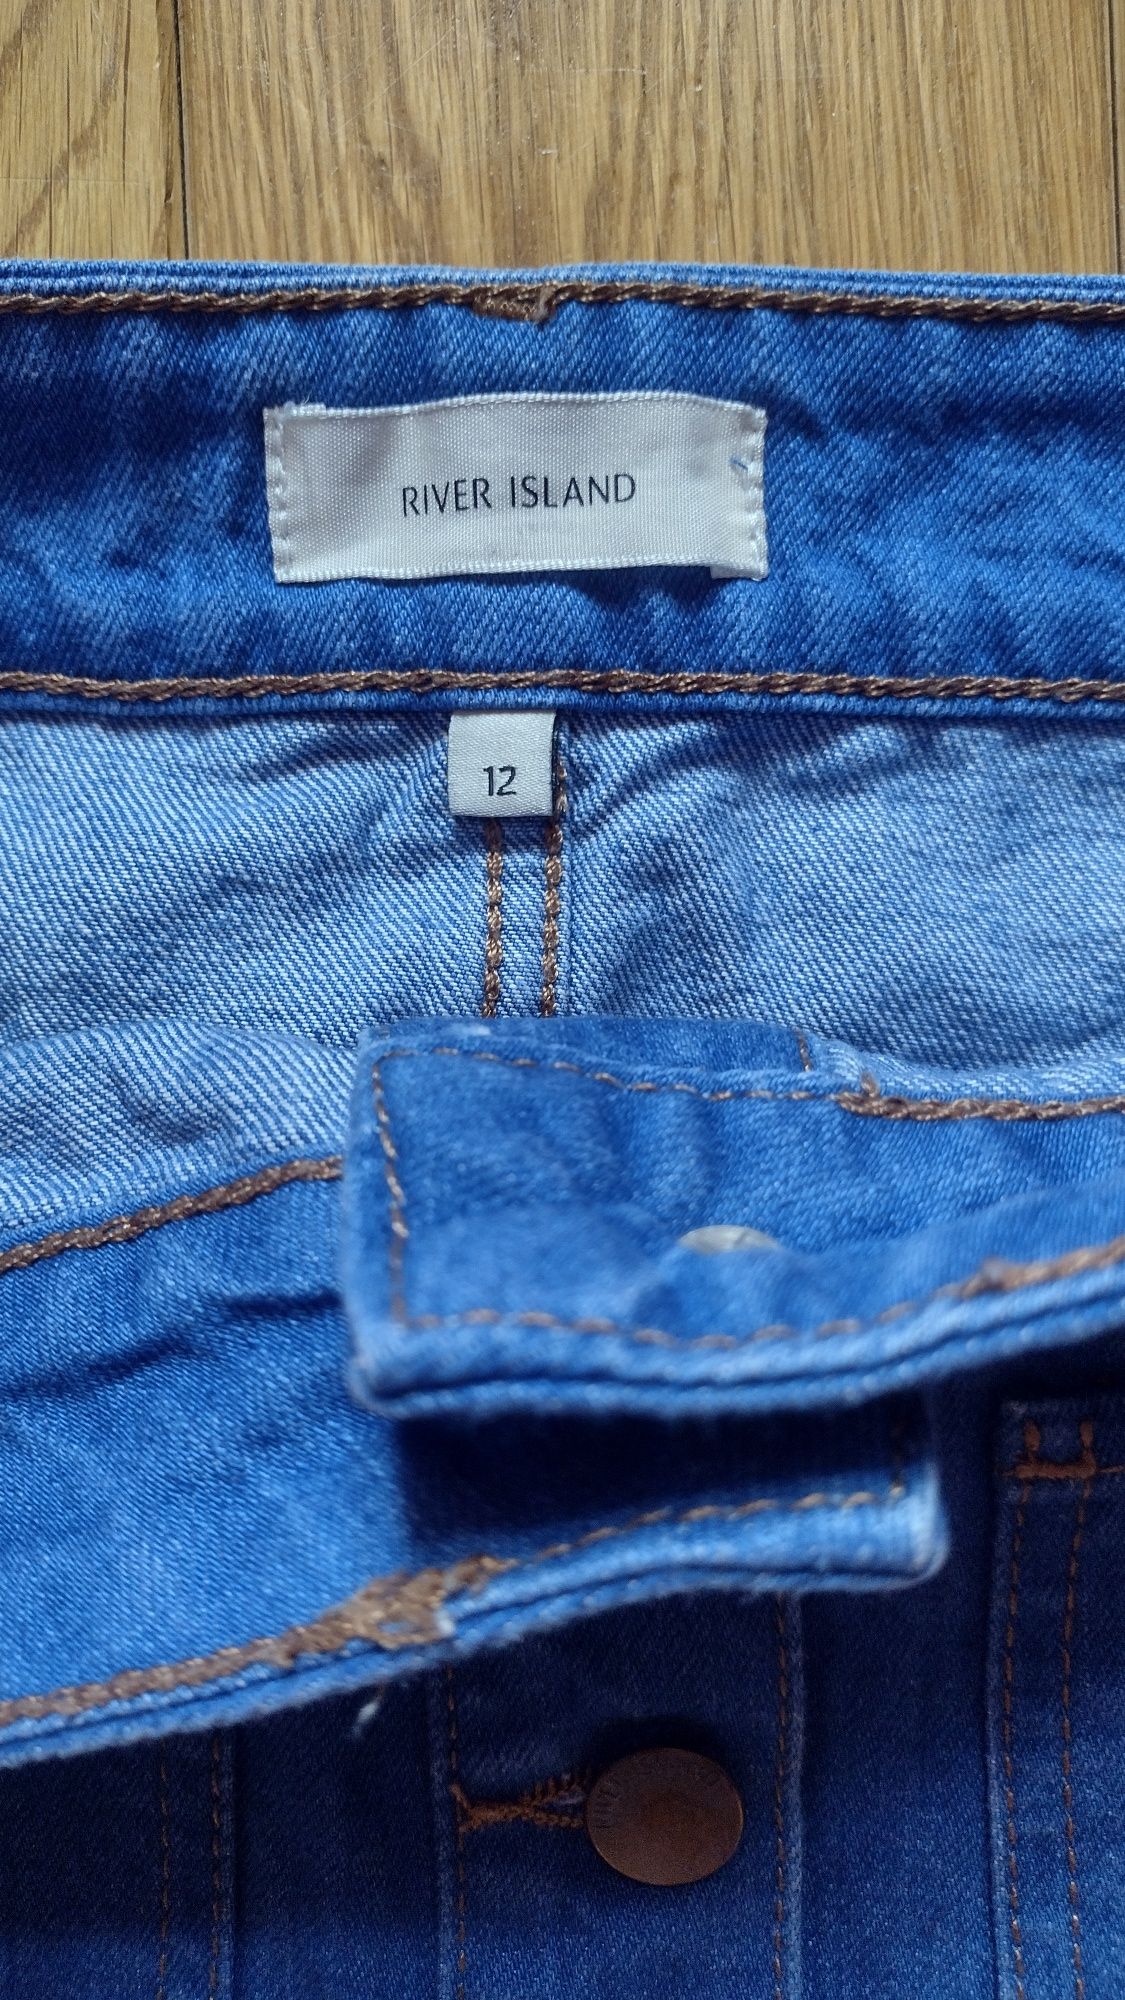 Яркая новая джинсовая юбка River island 12 размер